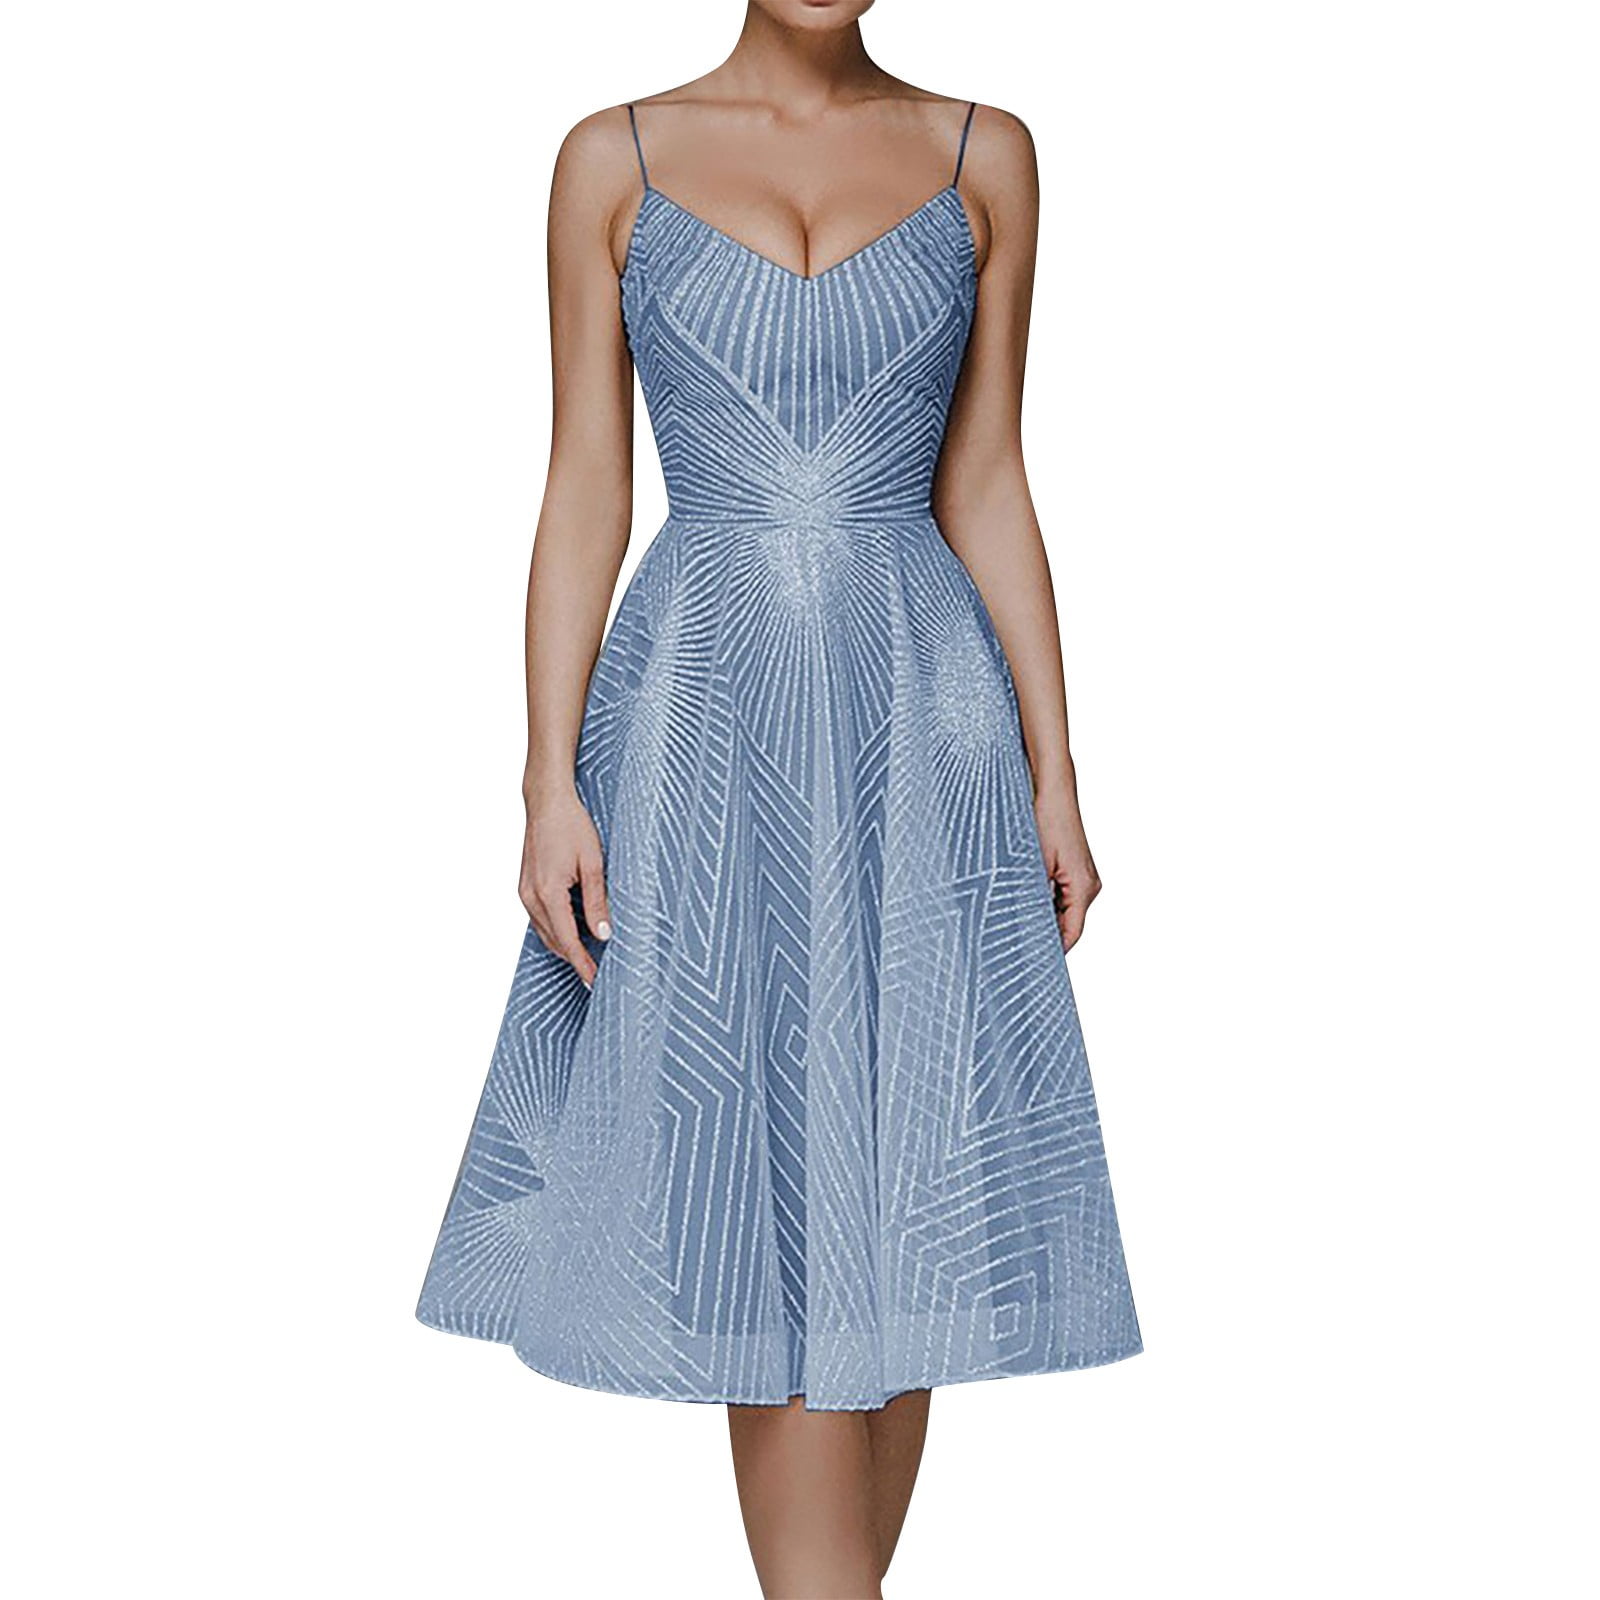 Kpoplk Semi Formal Dresses for Women Wedding Guest,Vintage Tea Dress for Women, Fit Flare Dress for , 3/4 Sleeves(Blue,L), Women's, Size: Large